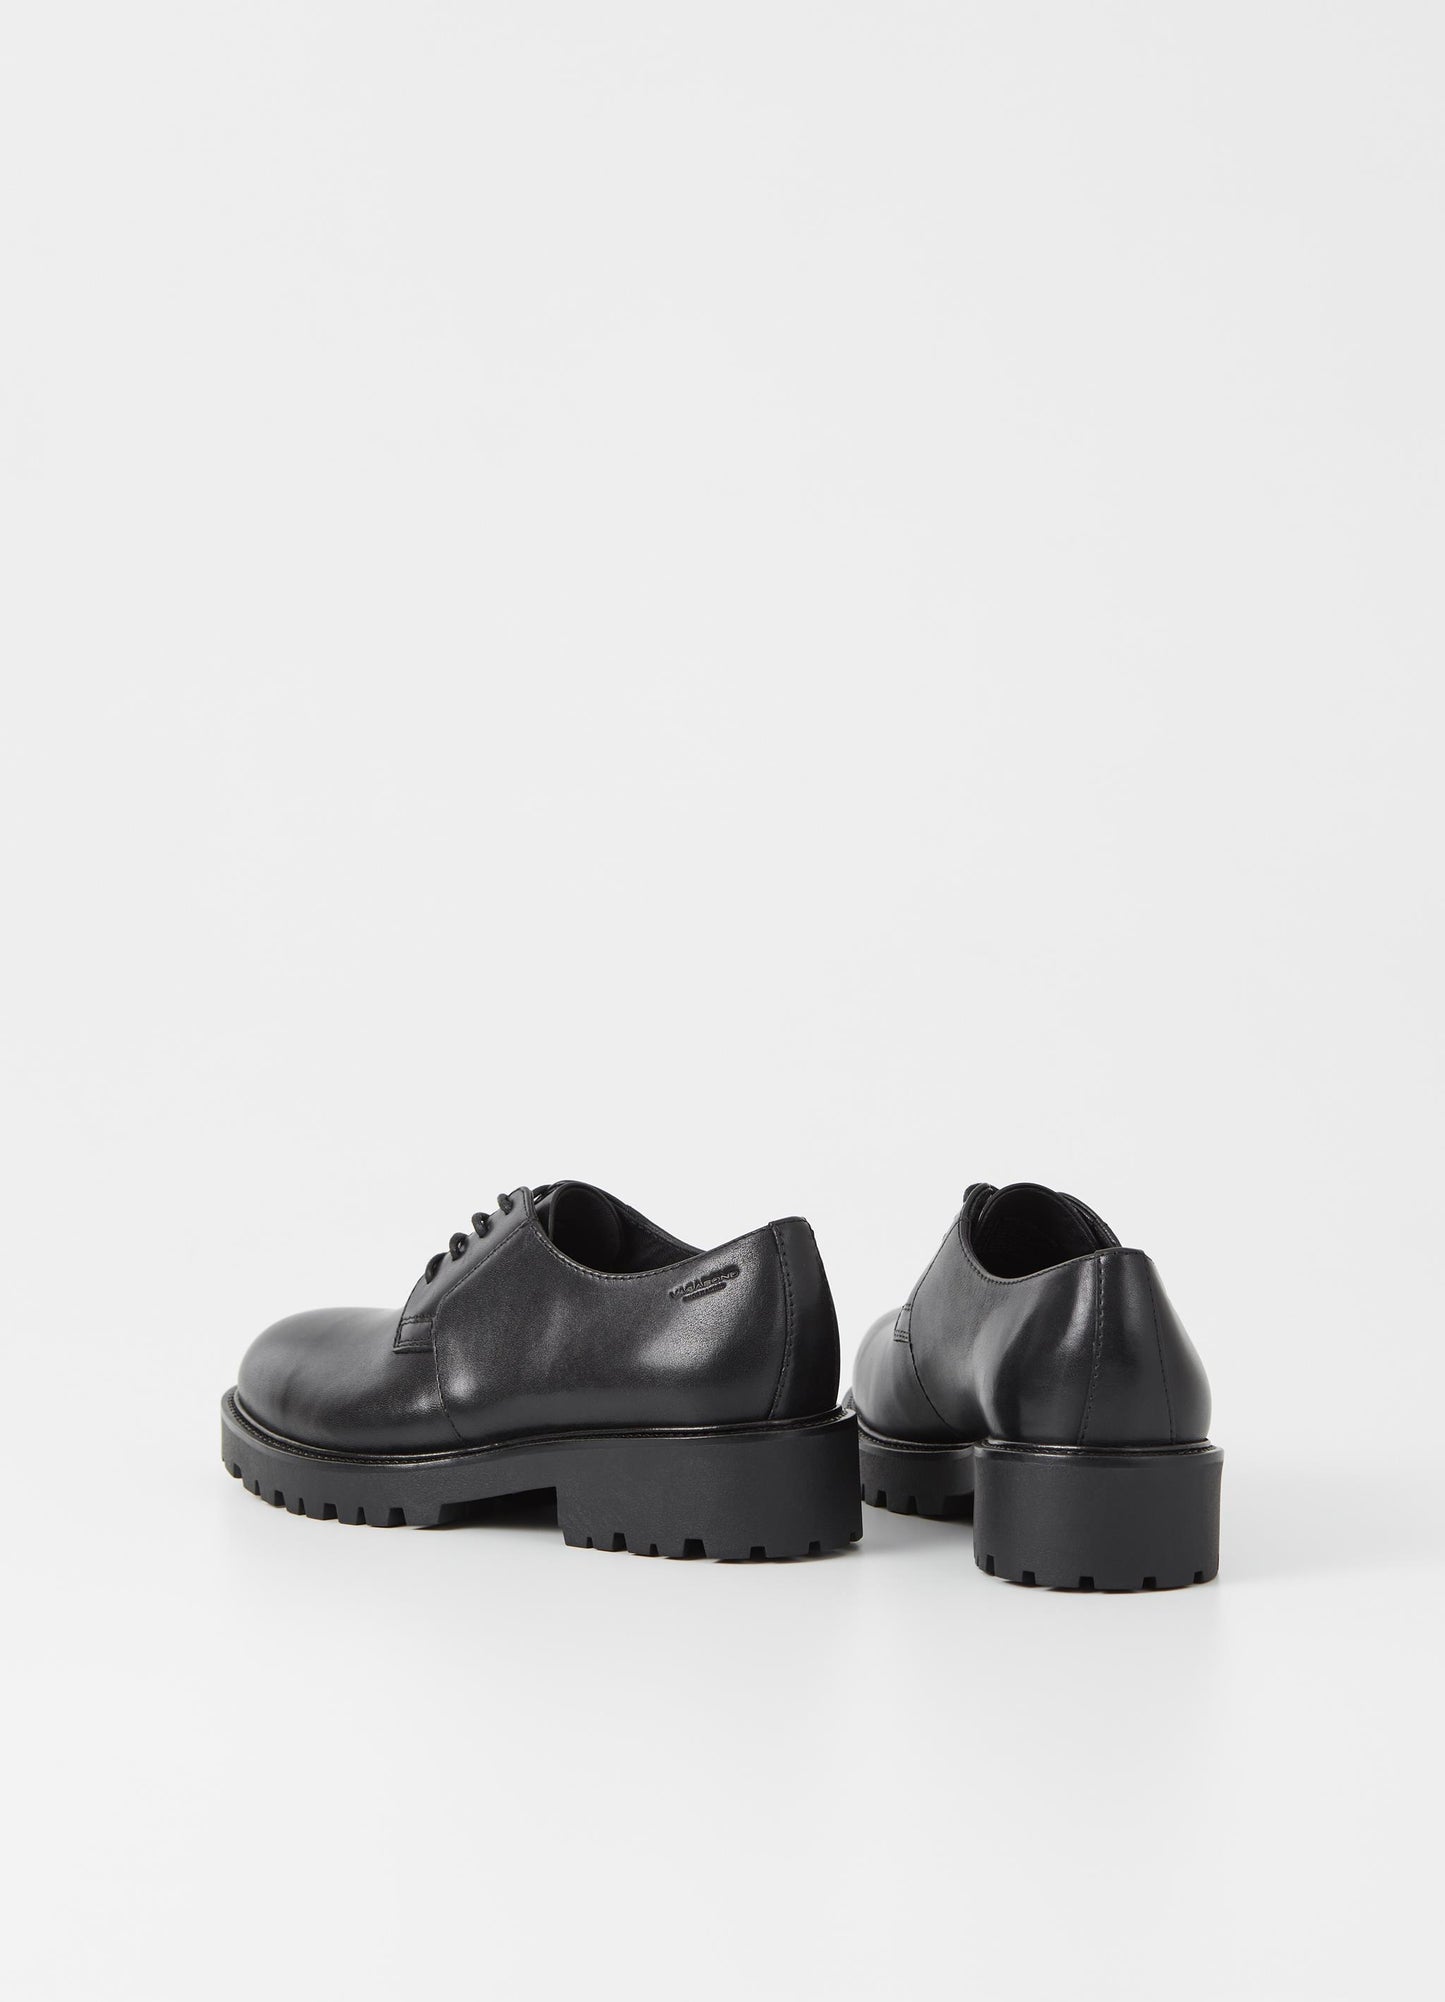 Kenova Shoes - Last Pair, Size 40!